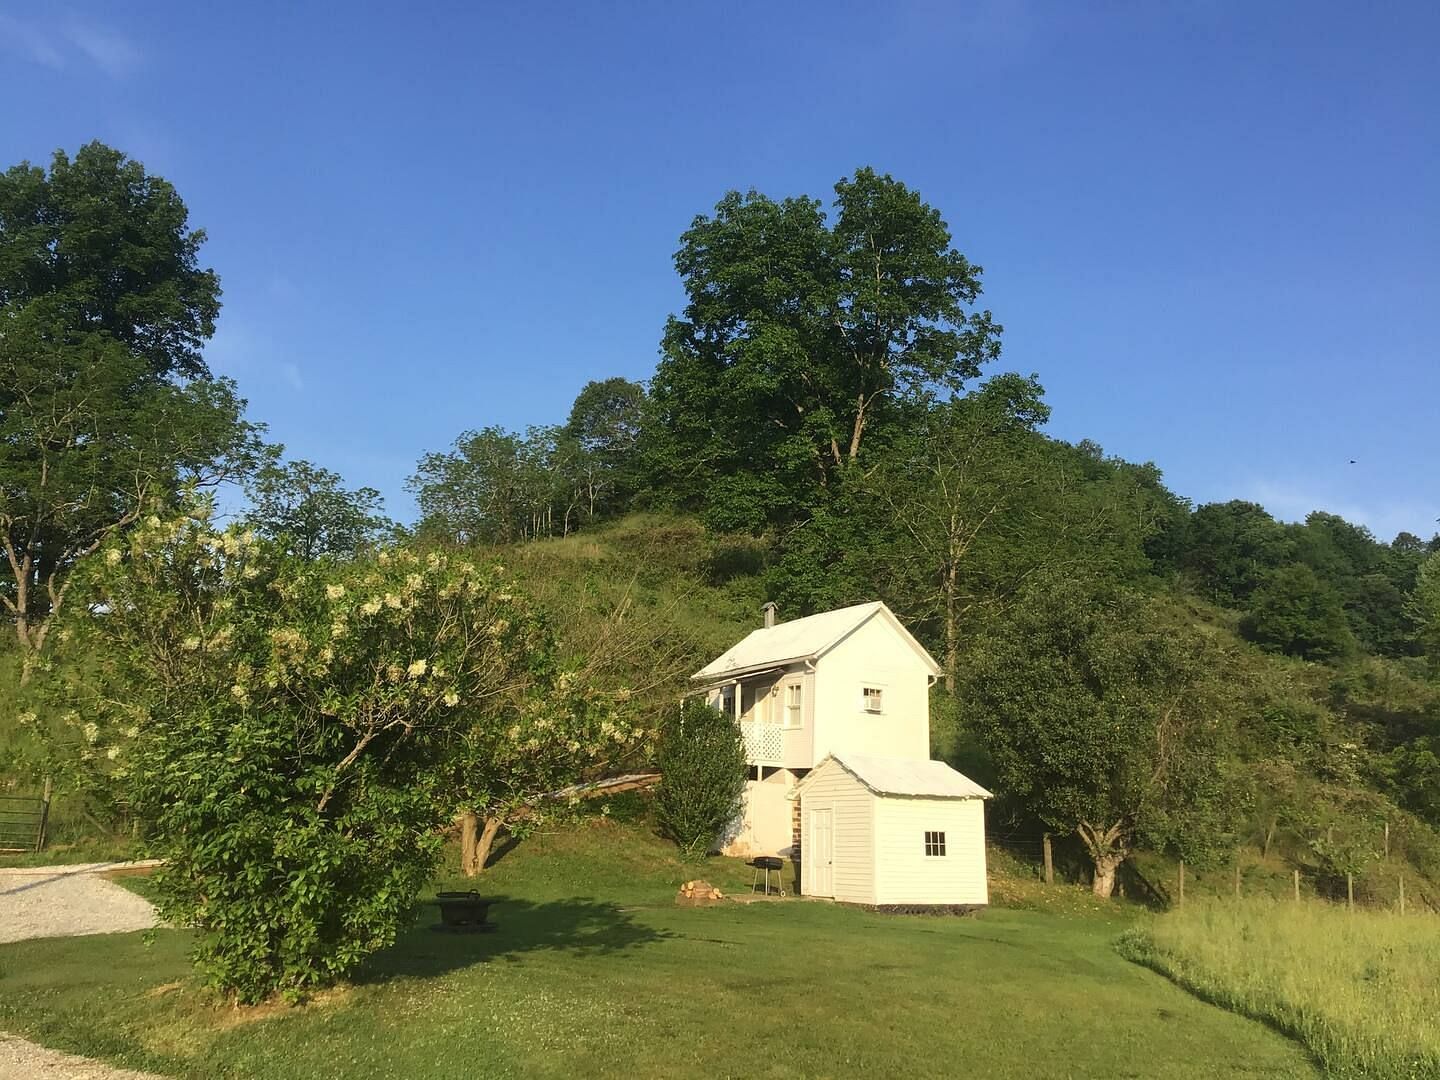 JWguest Rental unit at LeRoy, West Virginia | The Farm - Cottage On The Hill | Jwbnb no brobnb 3